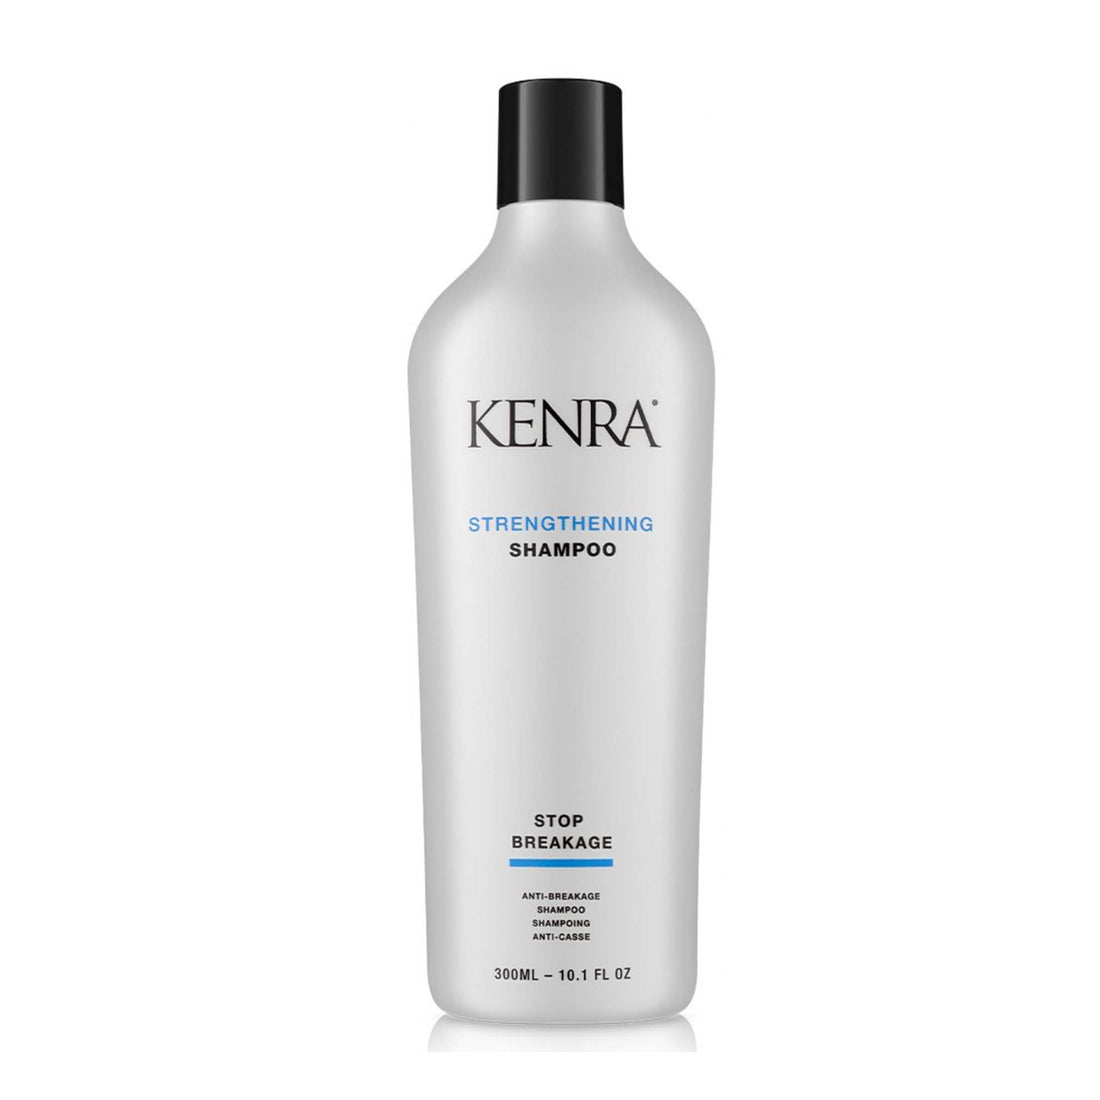 Kenra Strengthening Shampoo/Conditioner Duo